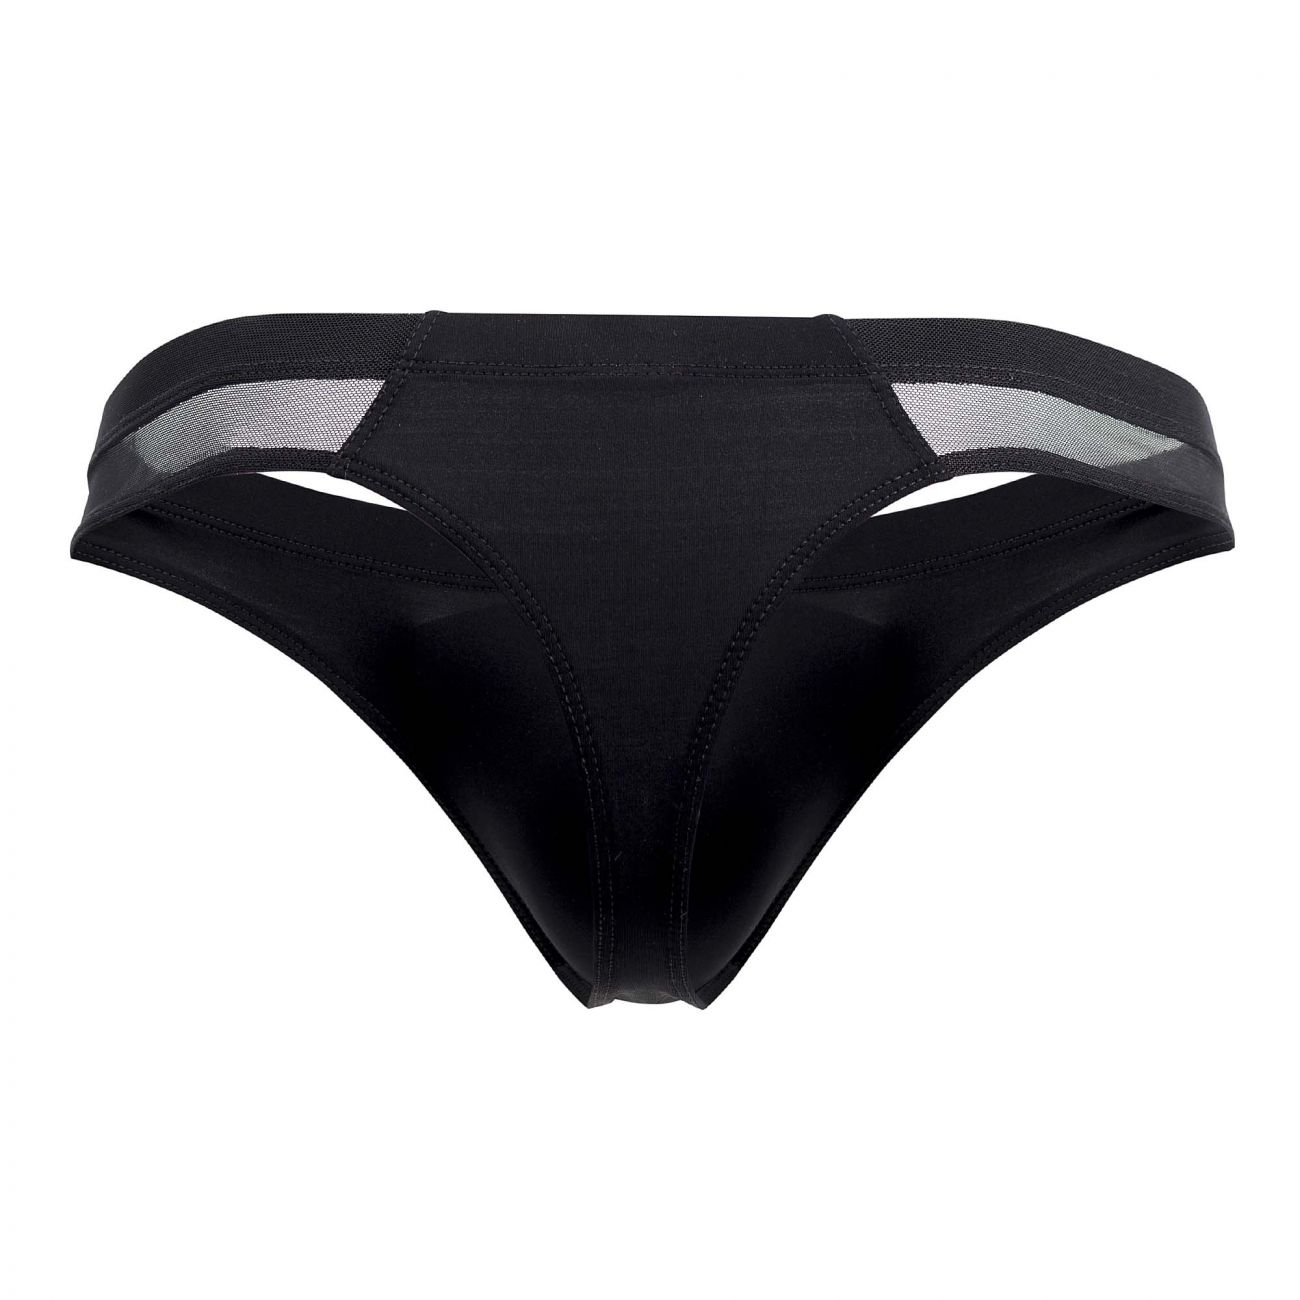 Mens Underwear: Clever 0204 Safety Thongs | eBay